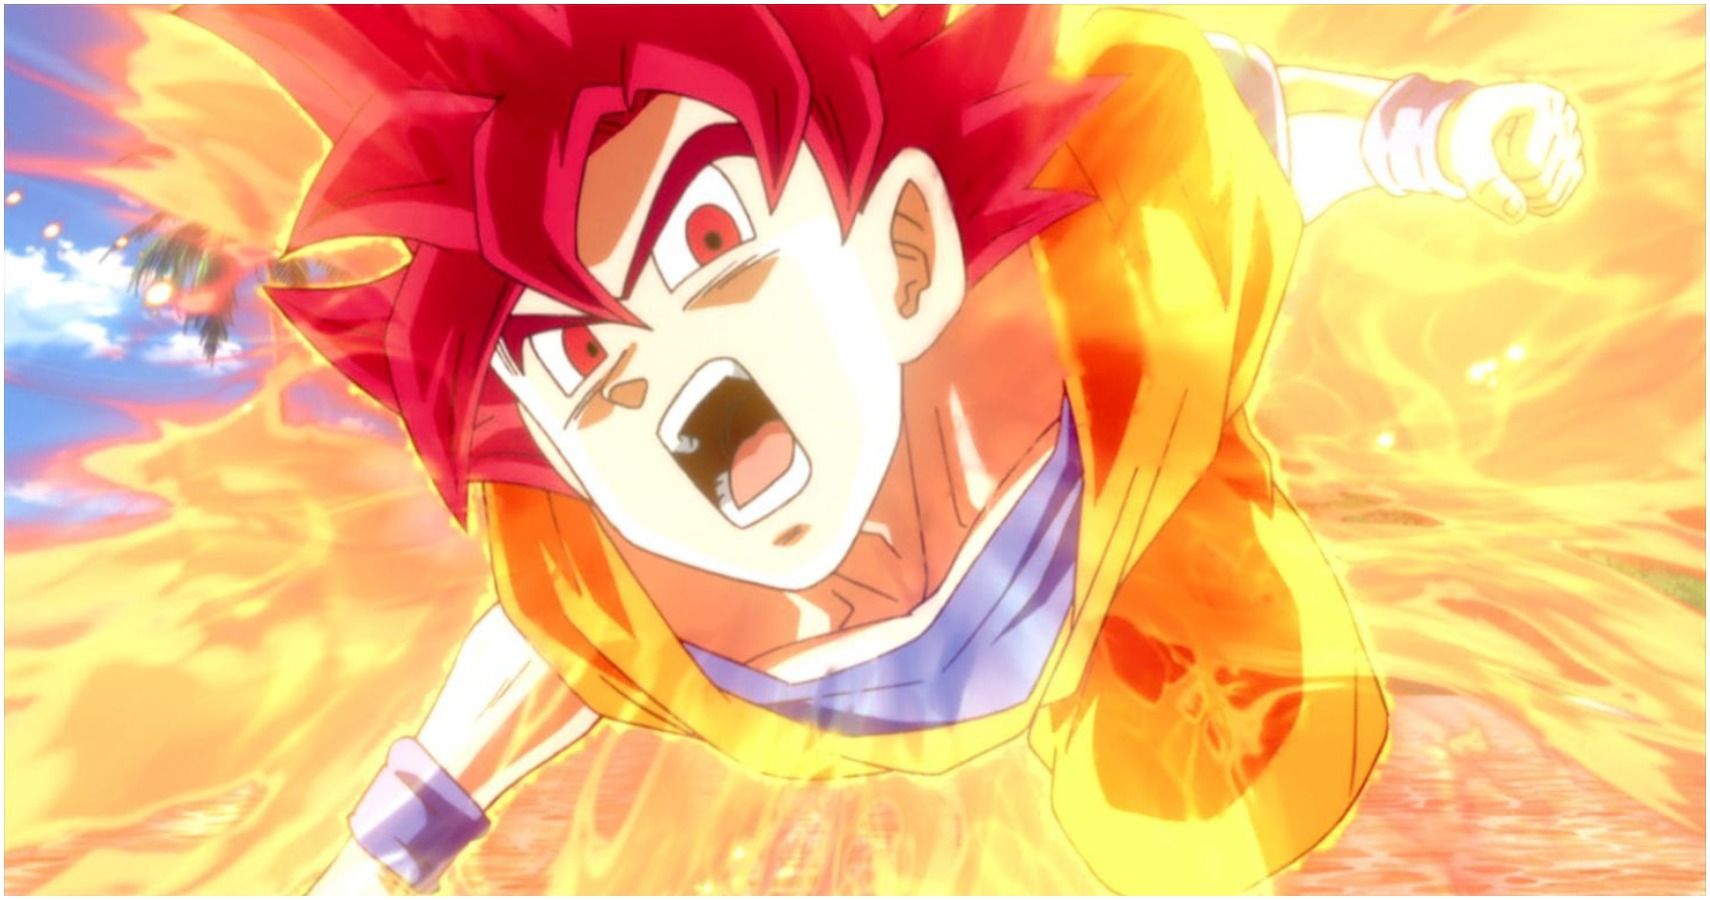 Goku flying in battle